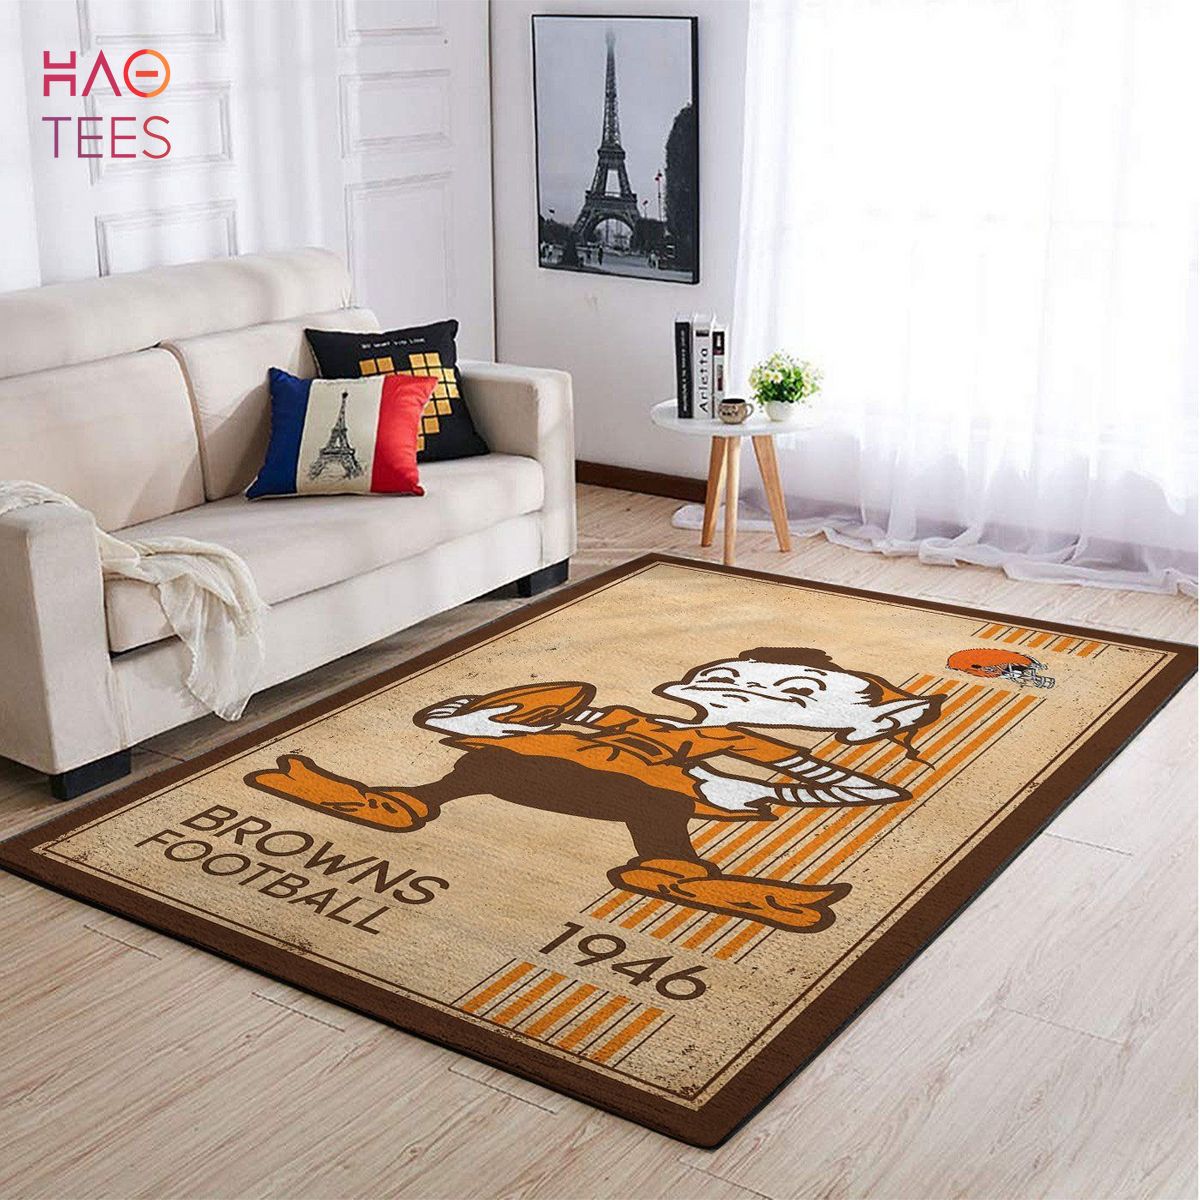 Cleveland Browns NFL Area Rugs Retro Style Living Room Carpet Team Logo Sports Floor Decor